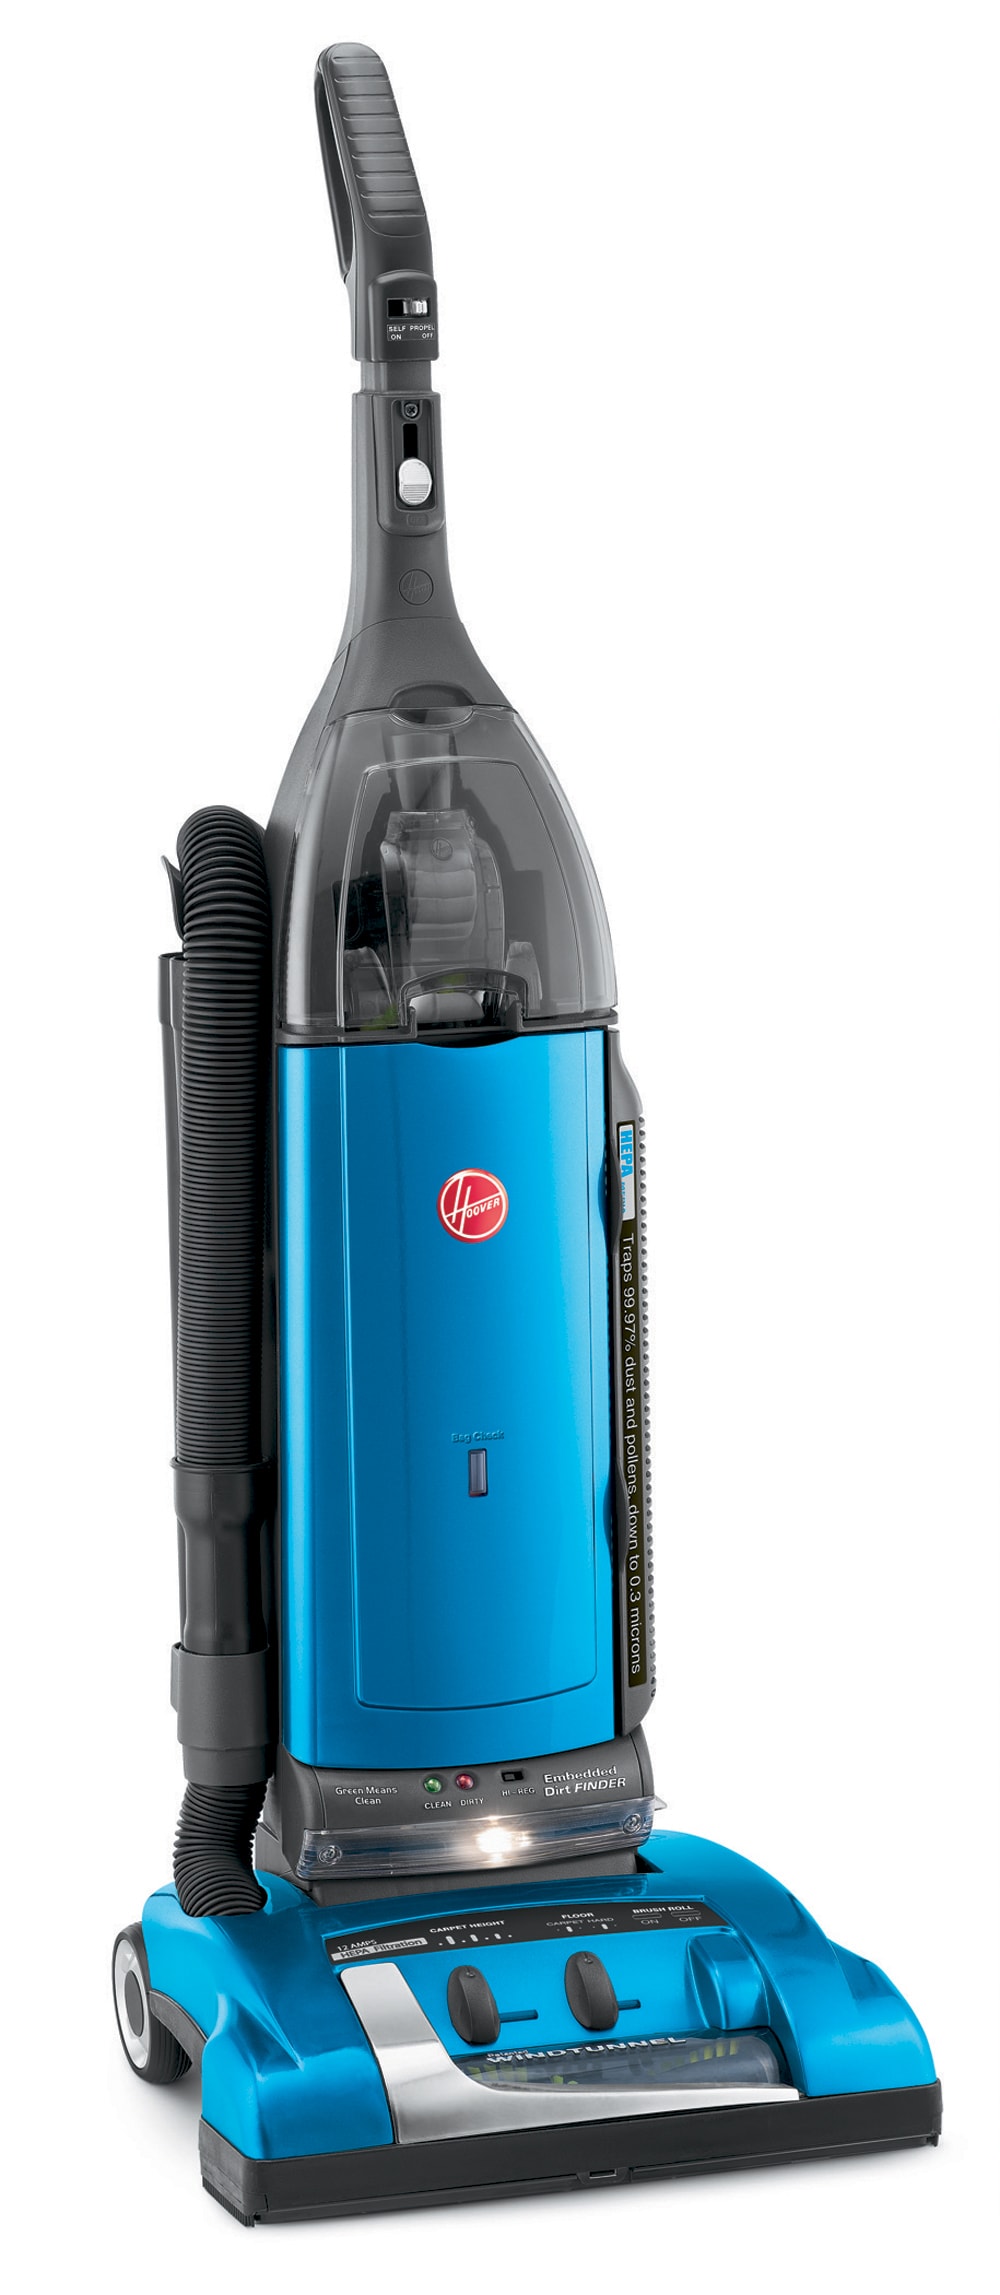 Hoover 35601865 H81-Hoover vacuum cleaner bag for Epa, 3.5 liters au  meilleur prix sur